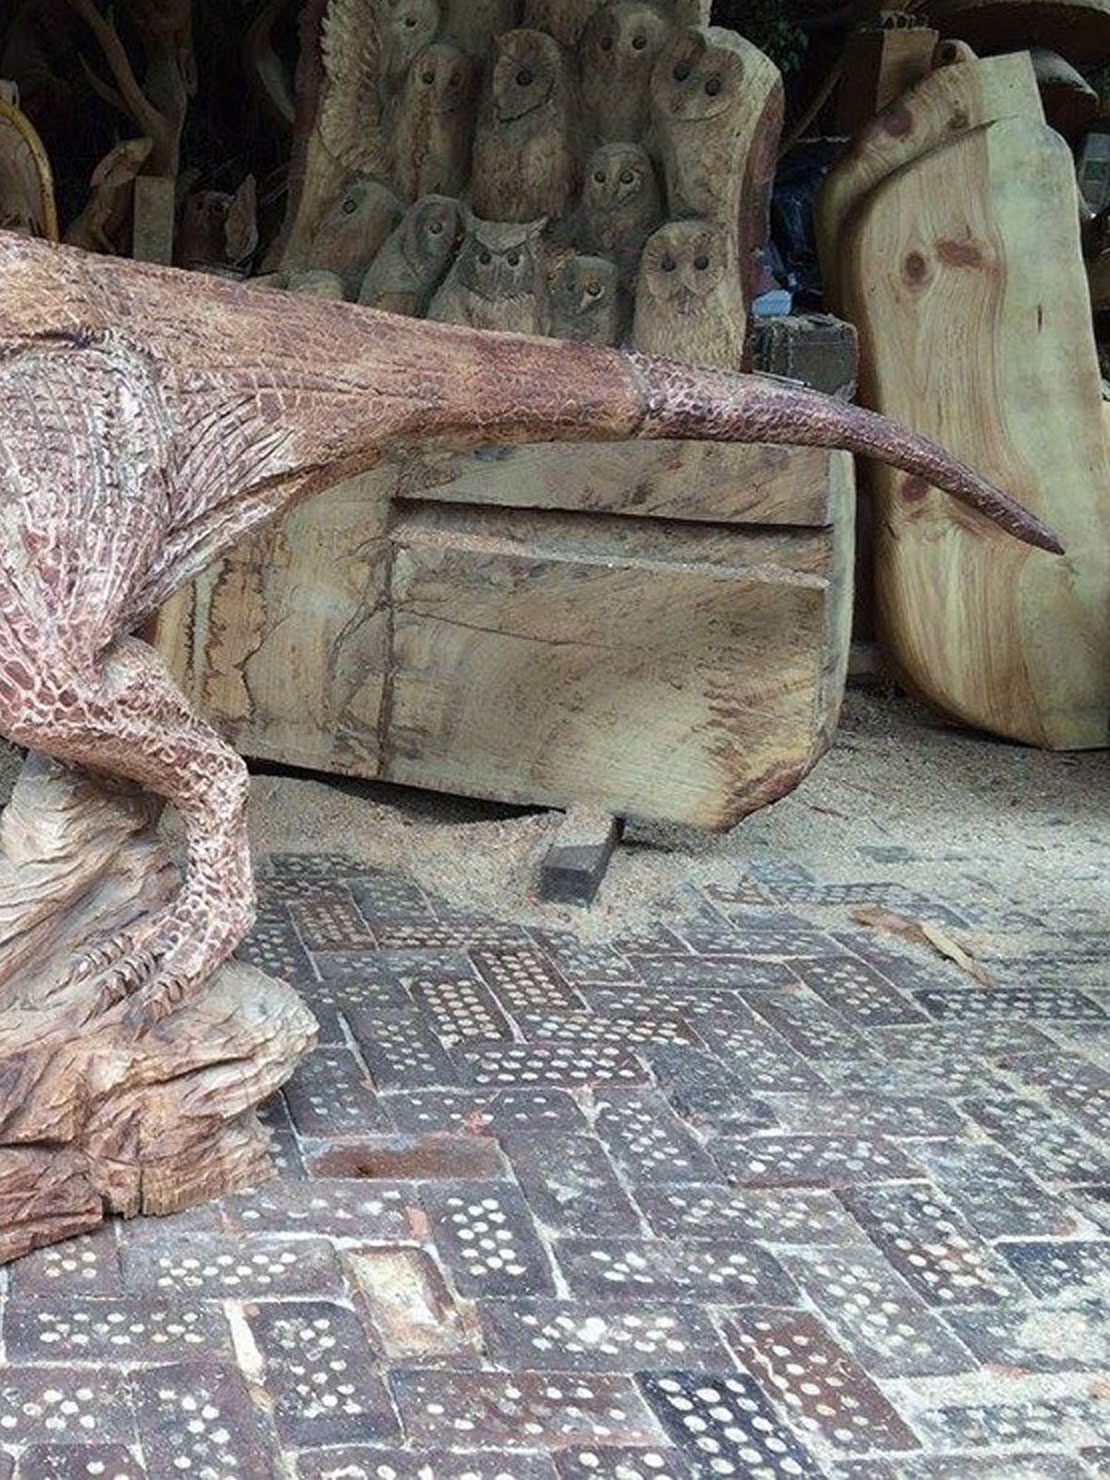 Tyrannosaurus Rex Sculpture by Matthew Crabb